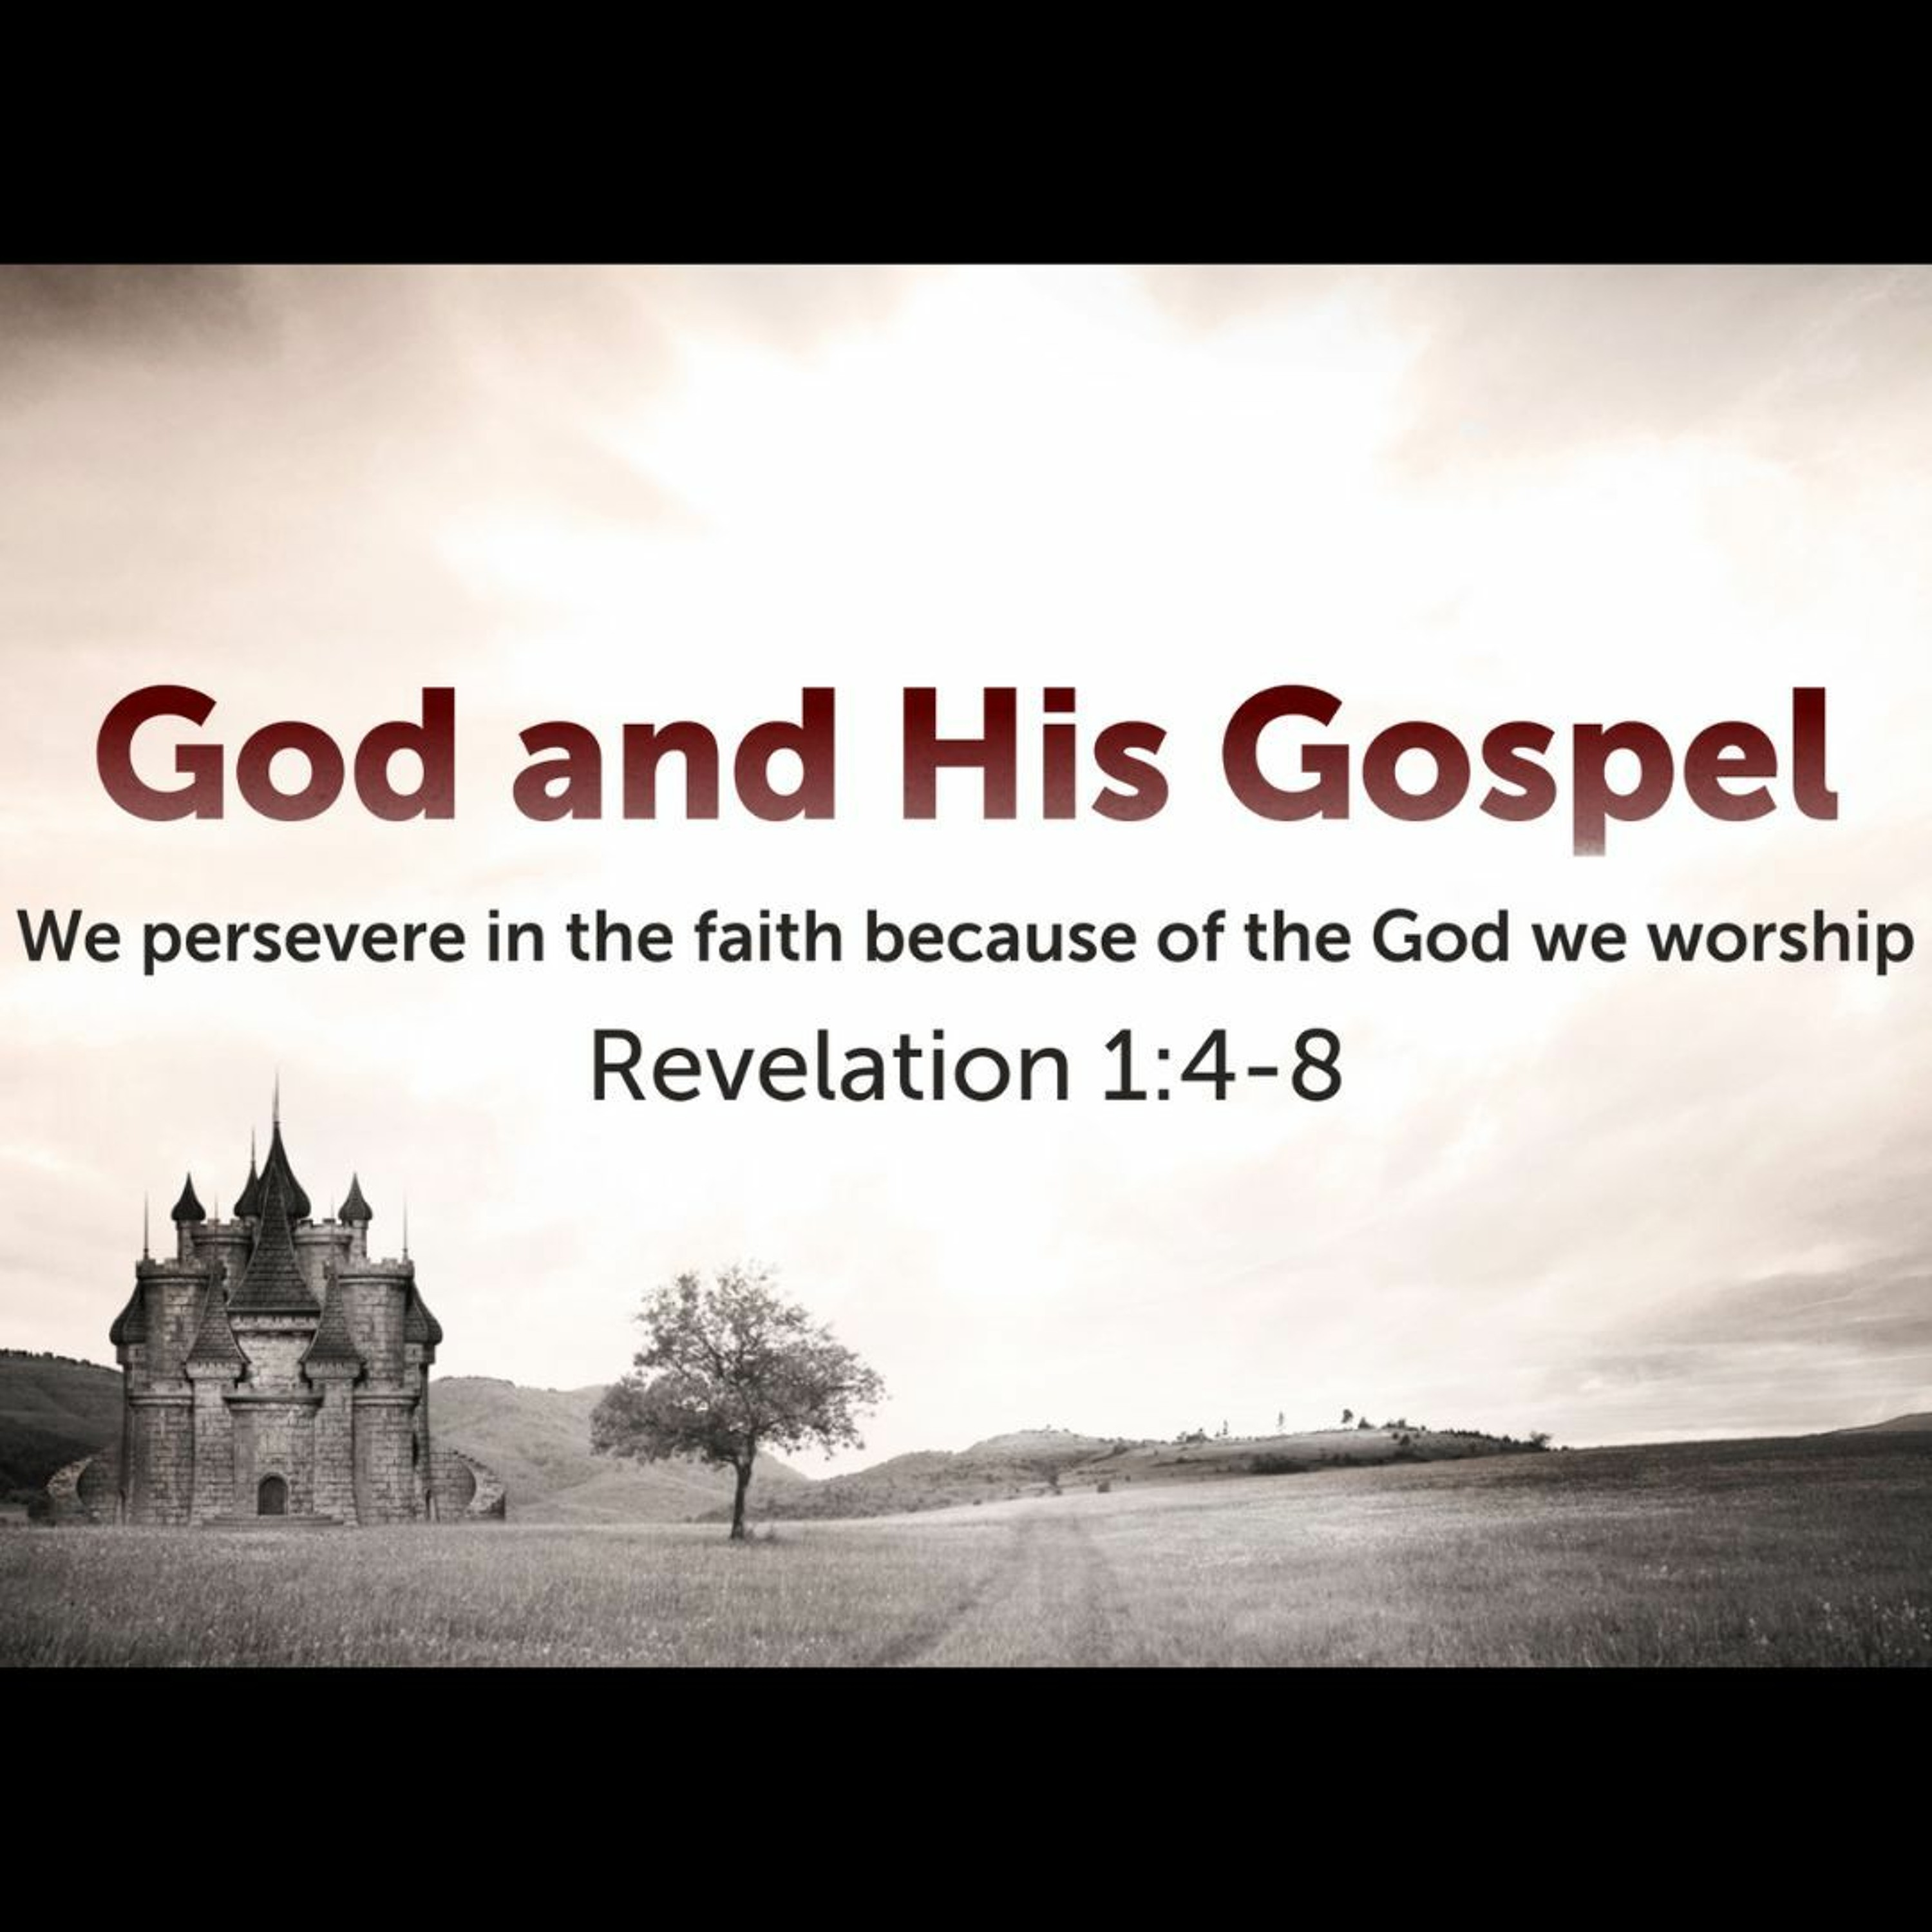 God and His Gospel (Revelation 1:4-8)